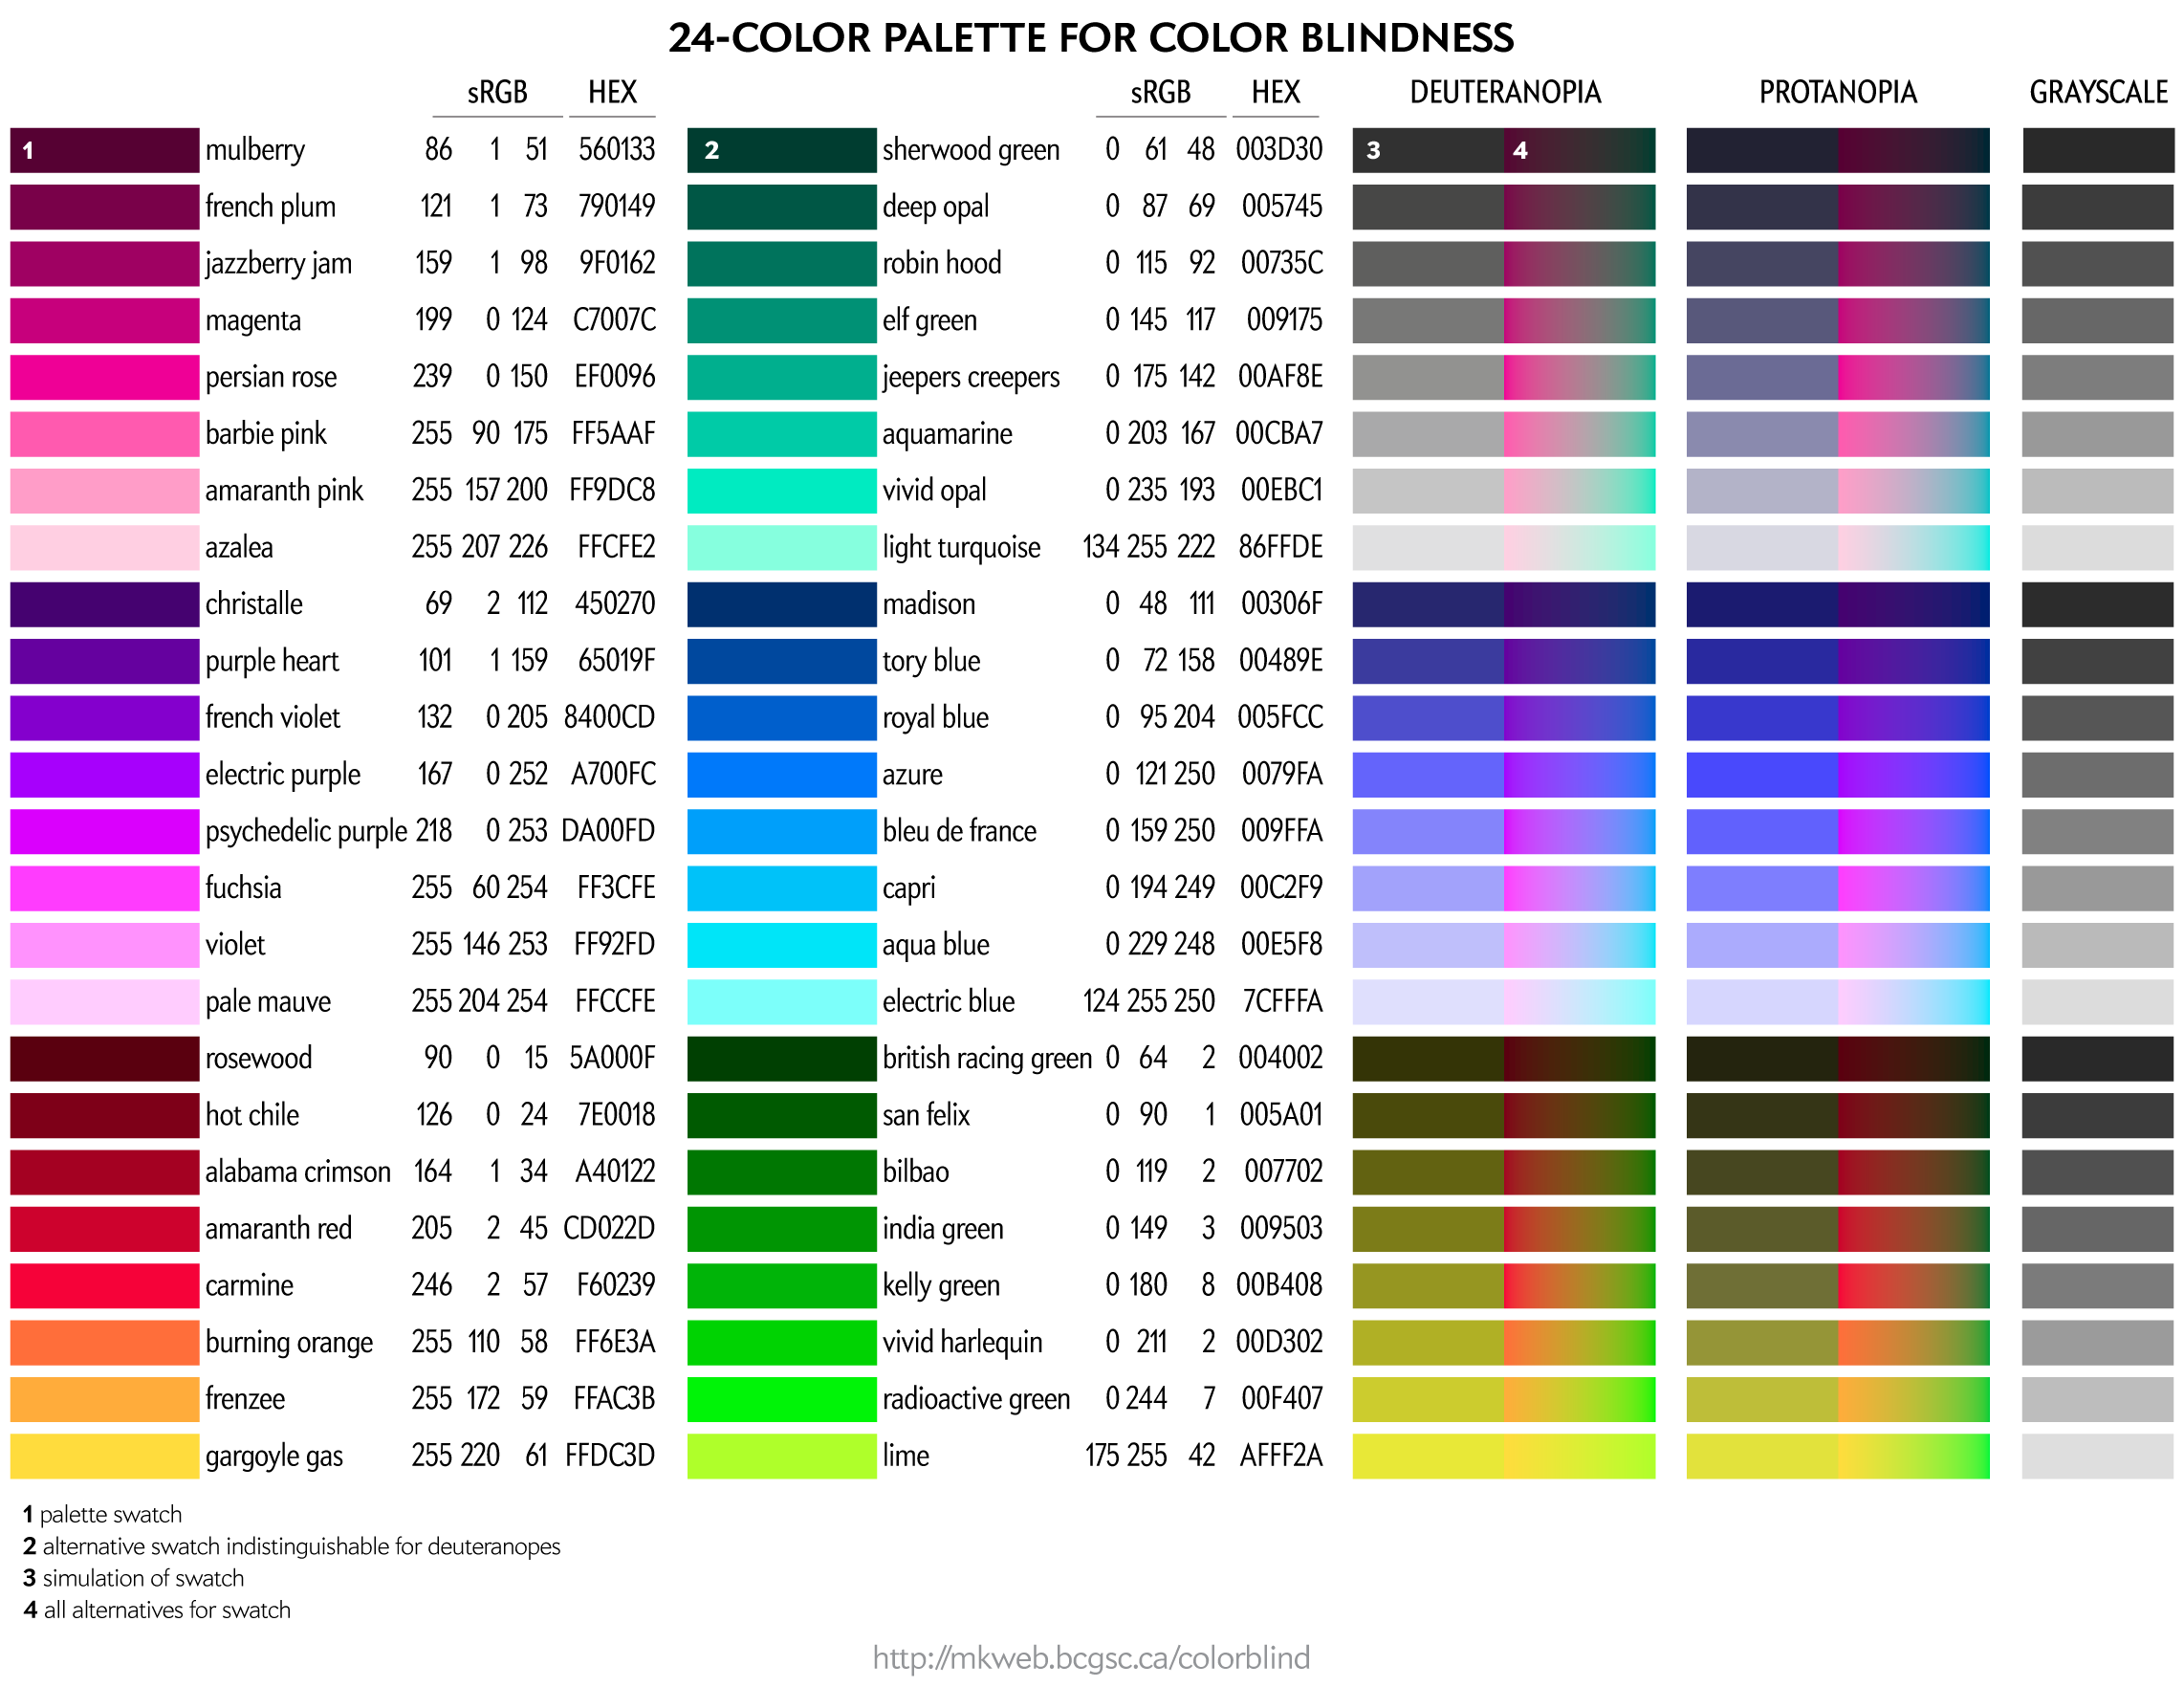 15-color palettes for color blindness / Martin Krzywinski @MKrzywinski mkweb.bcgsc.ca